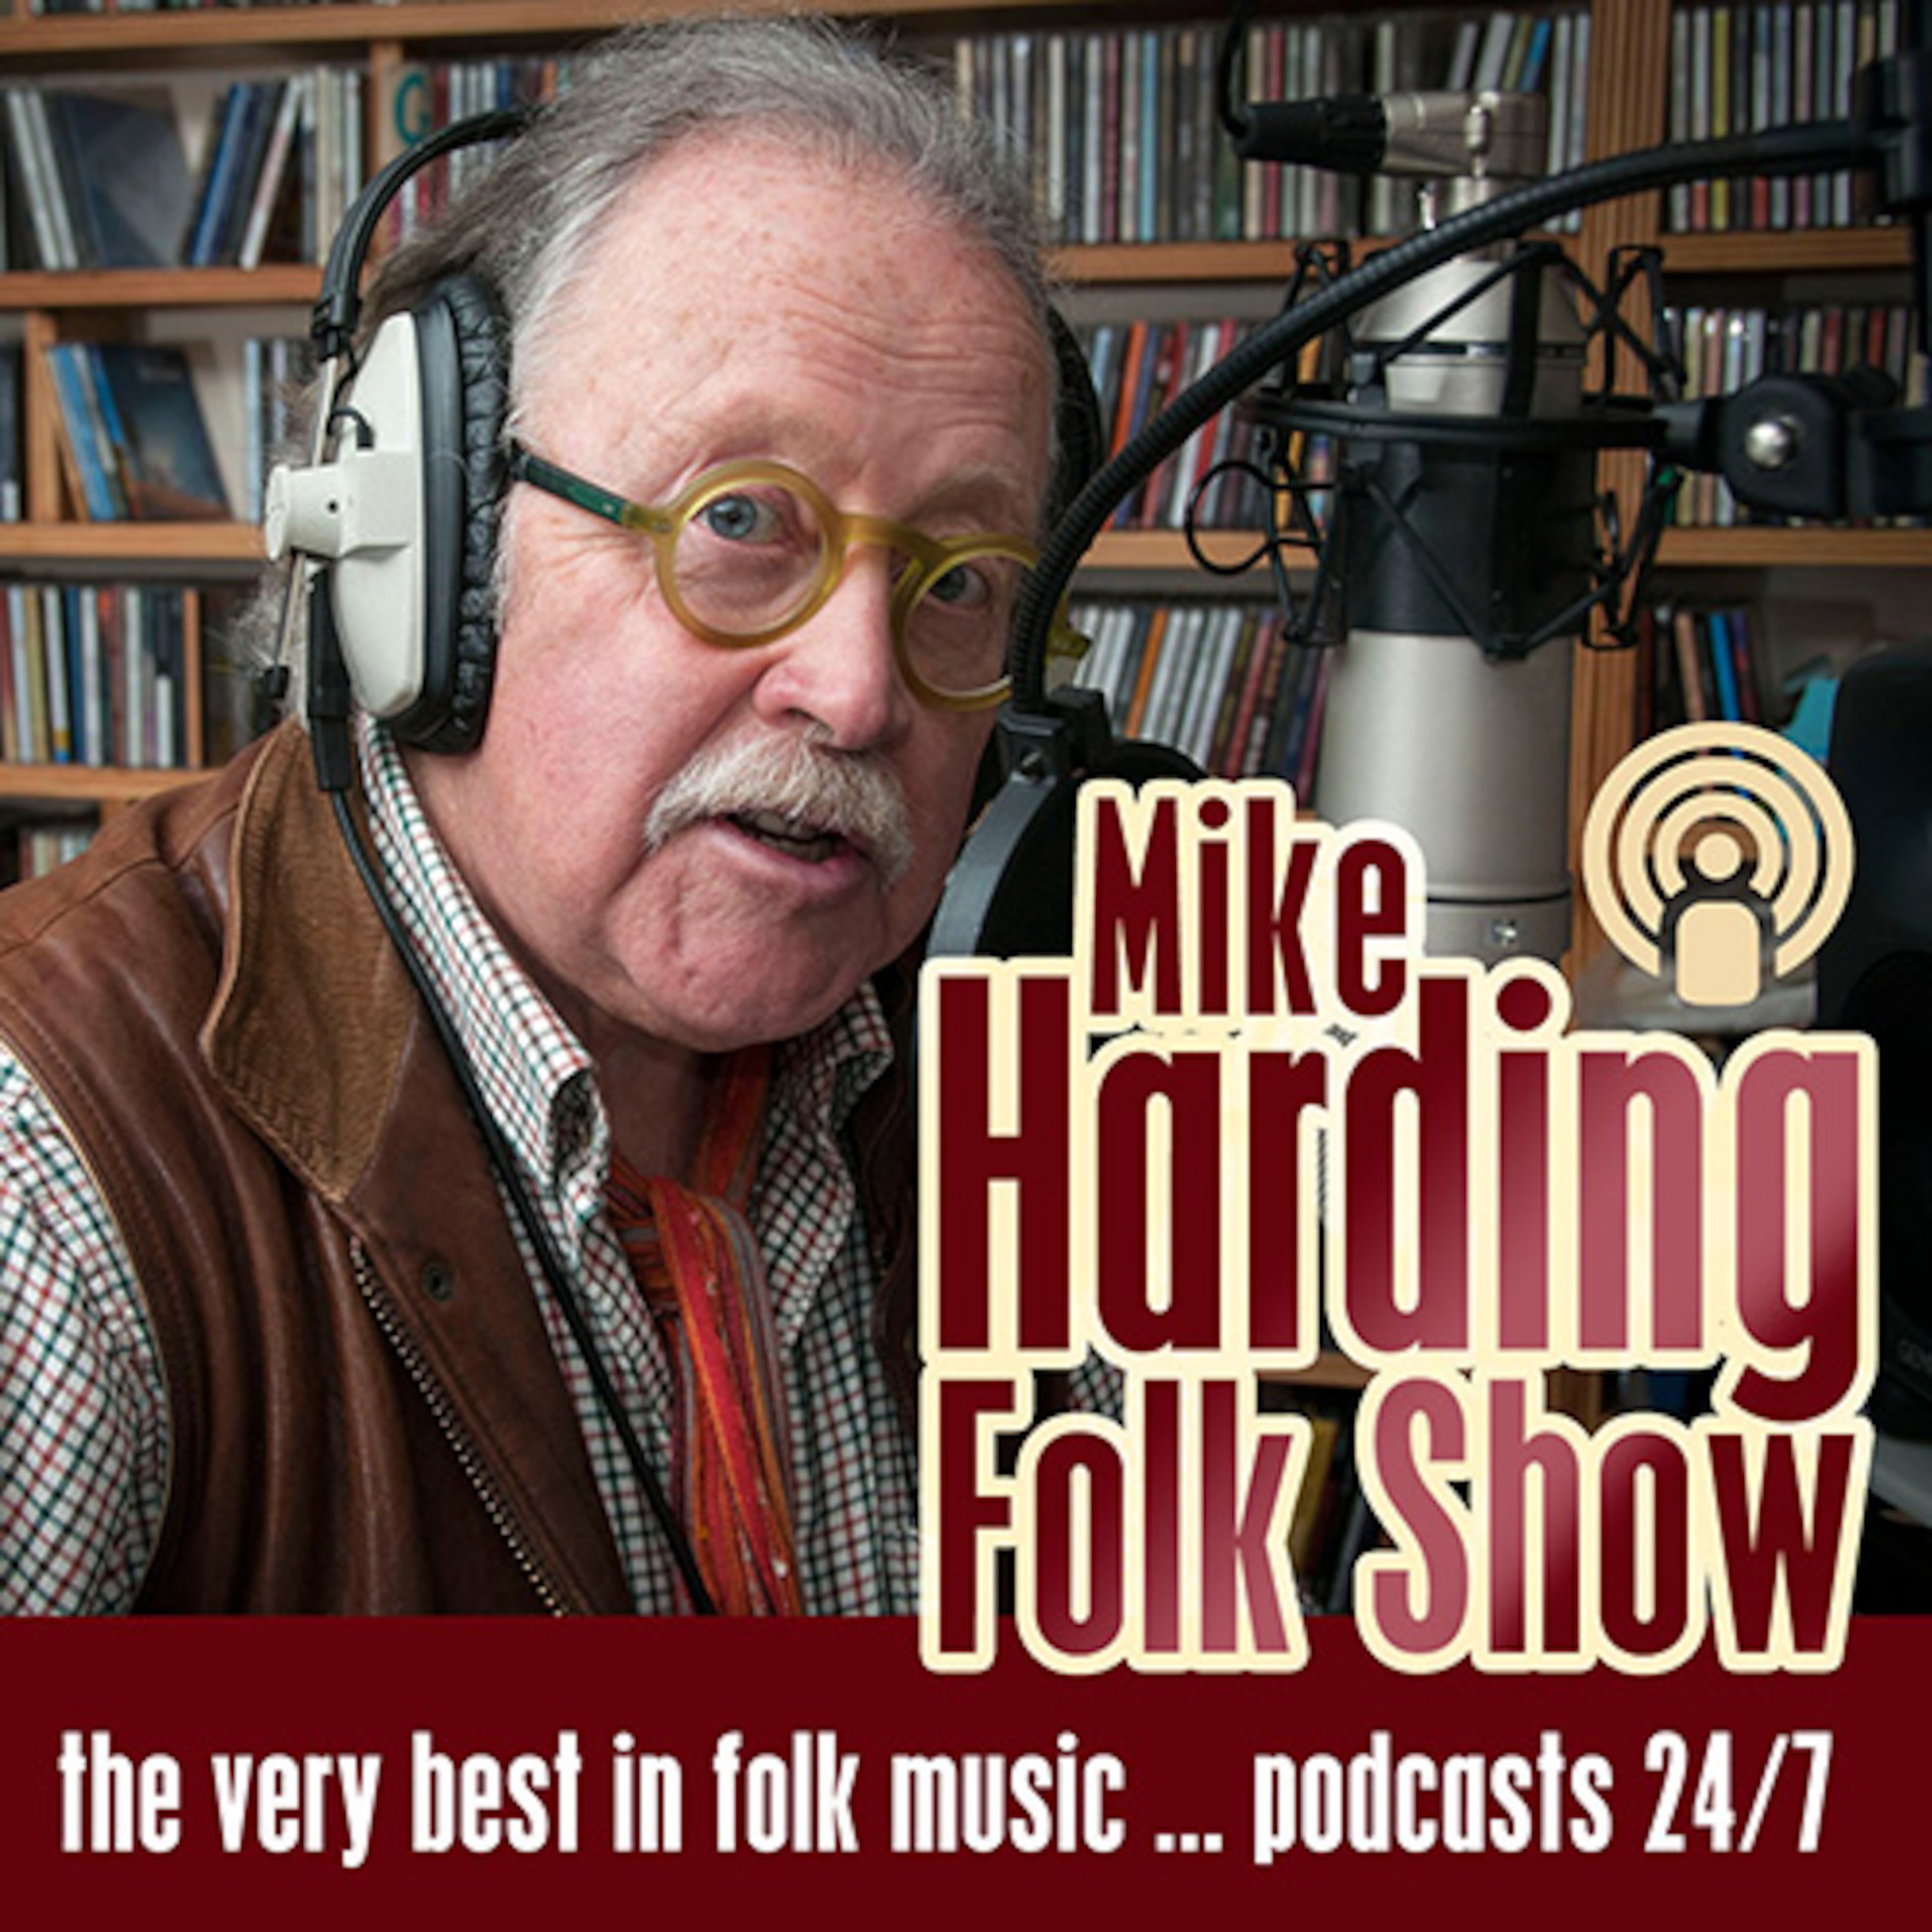 Mike Harding Folk Show 254